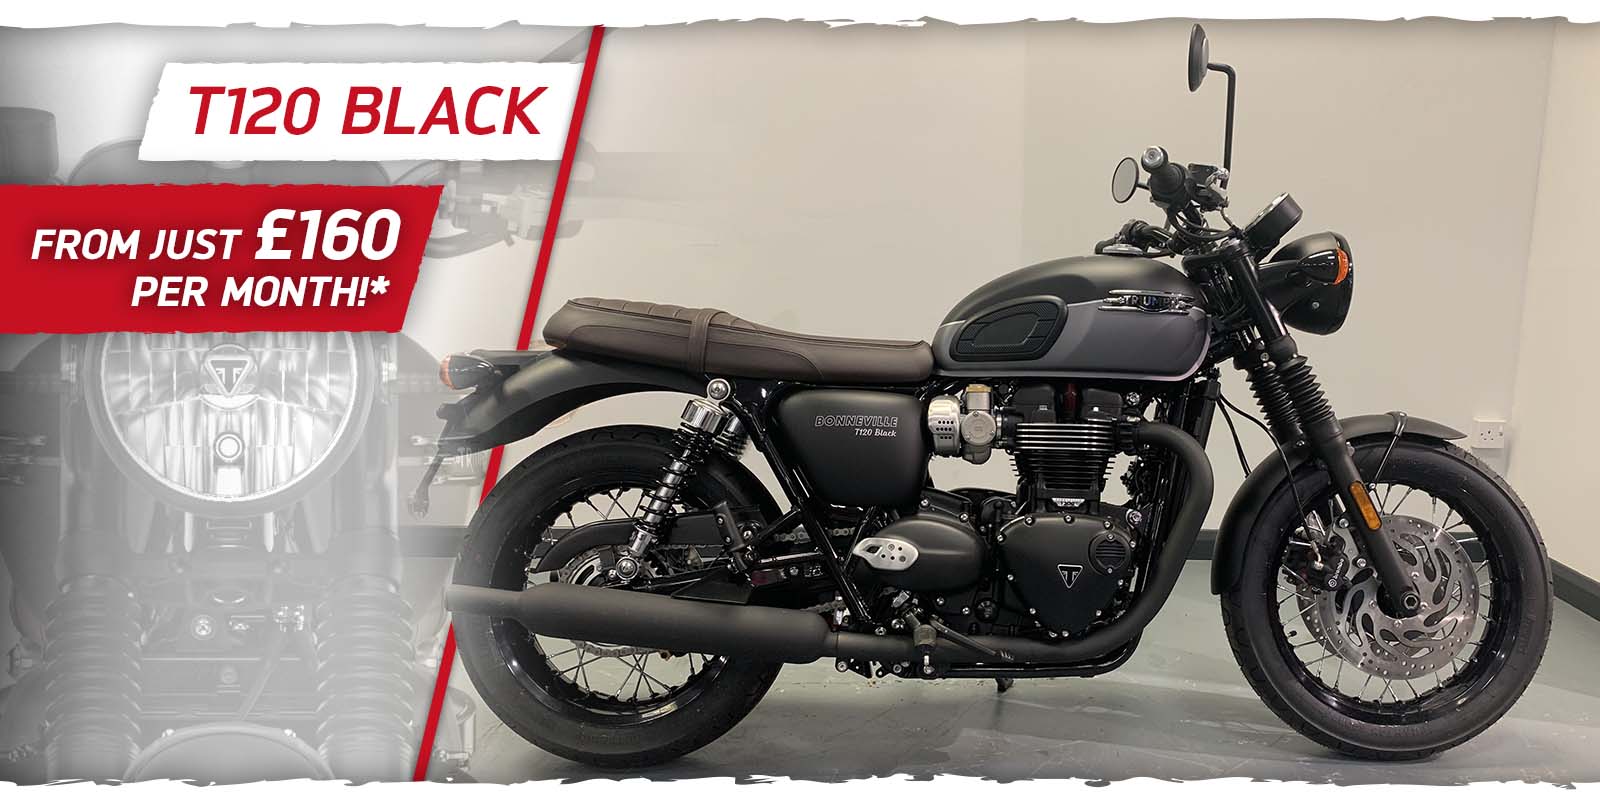 Laguna Triumph T120 Black Motorcycle Offer